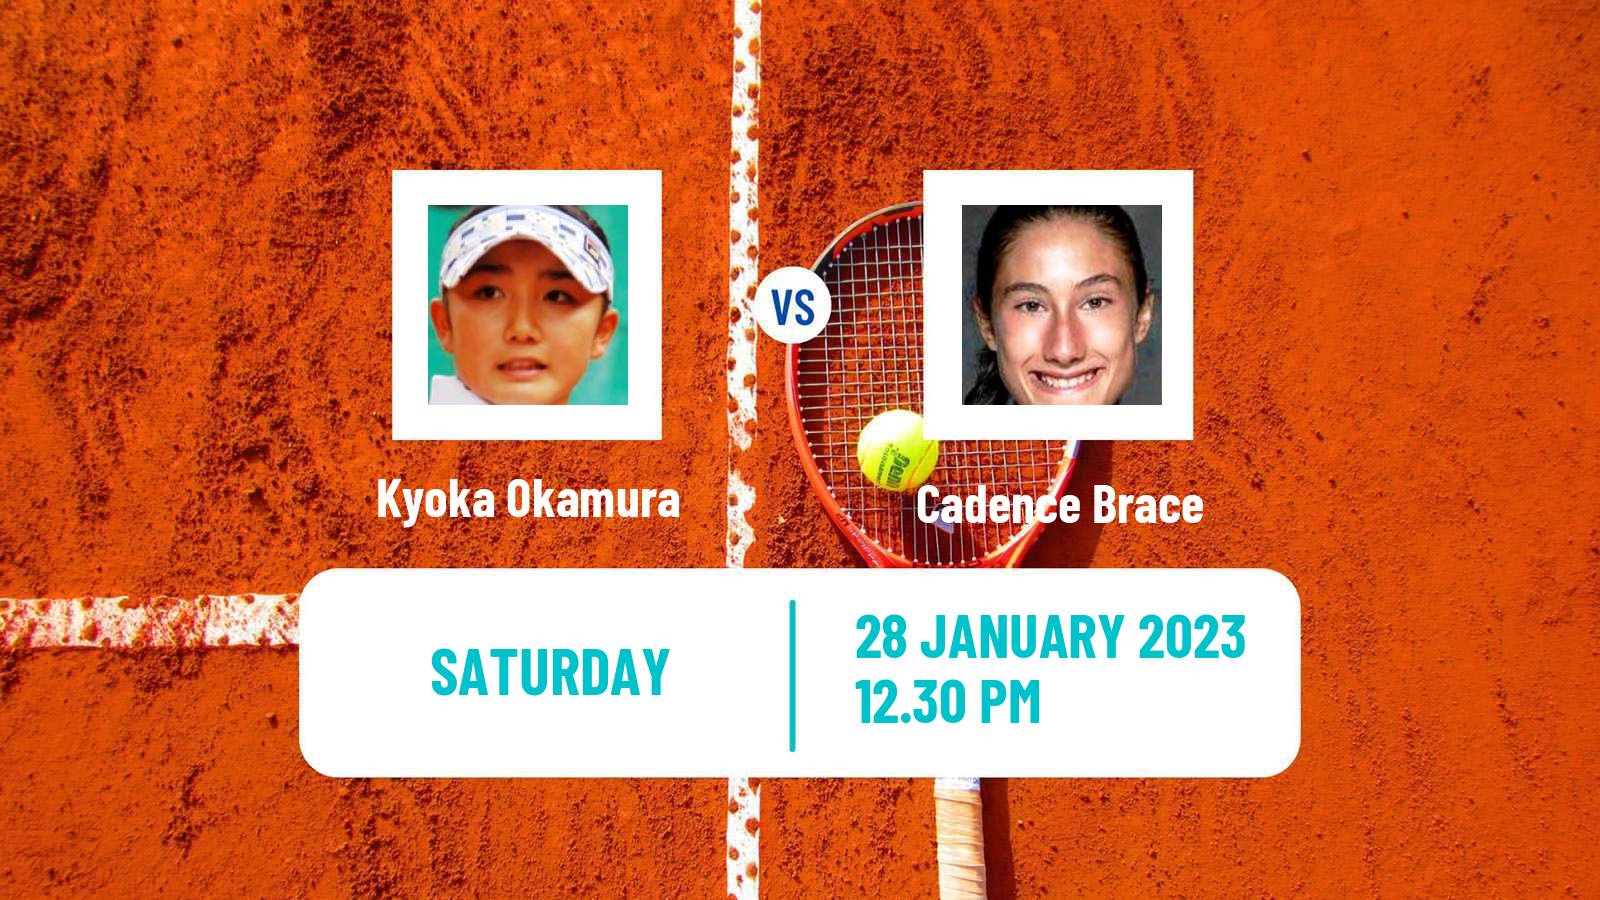 Tennis ATP Challenger Kyoka Okamura - Cadence Brace